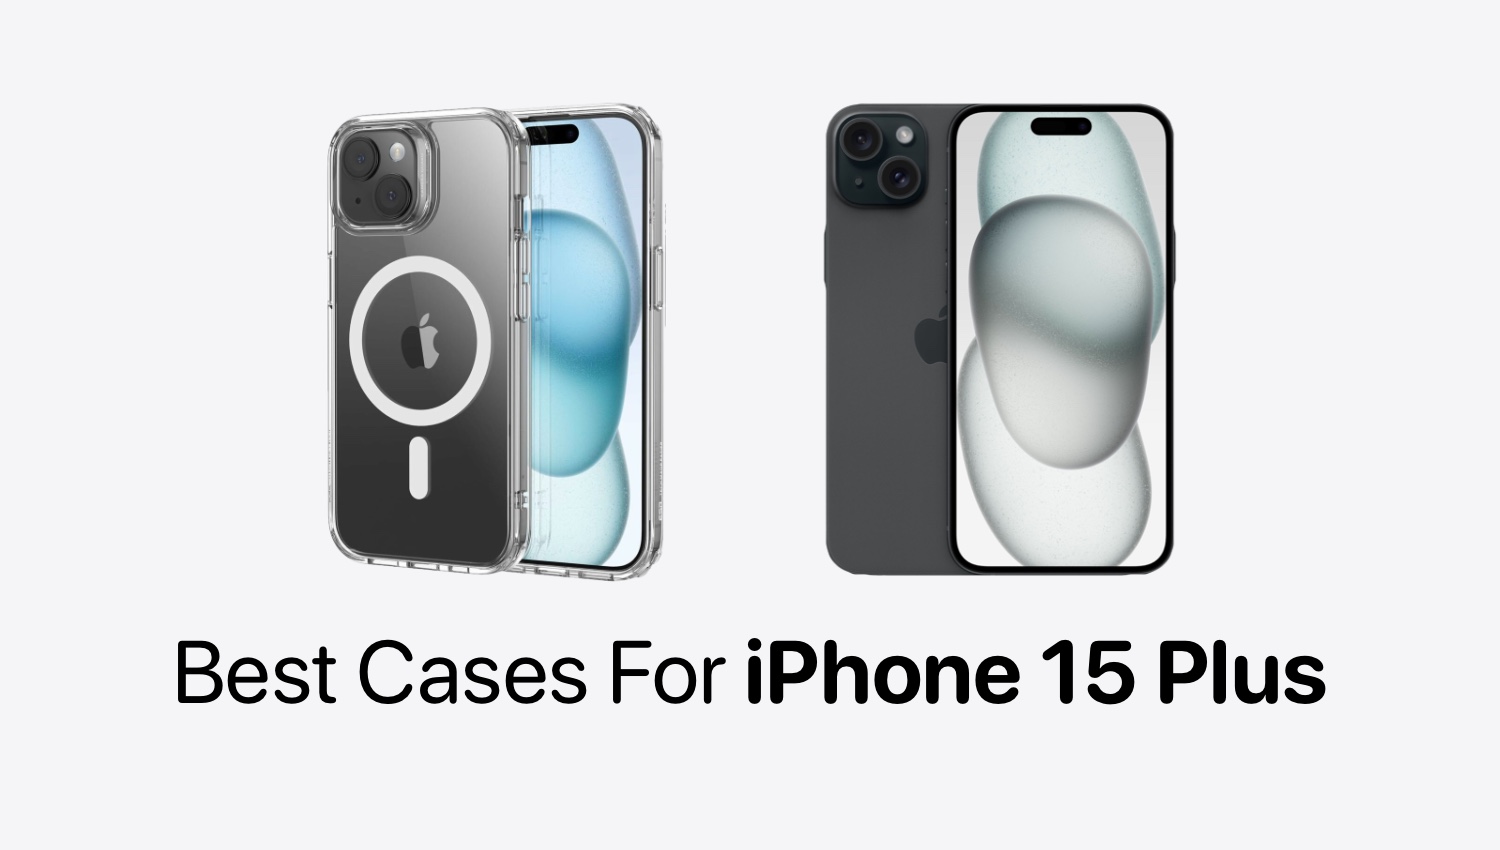 iPhone 15 Pro Case Nano Pop Mag - Caseology.com Official Site